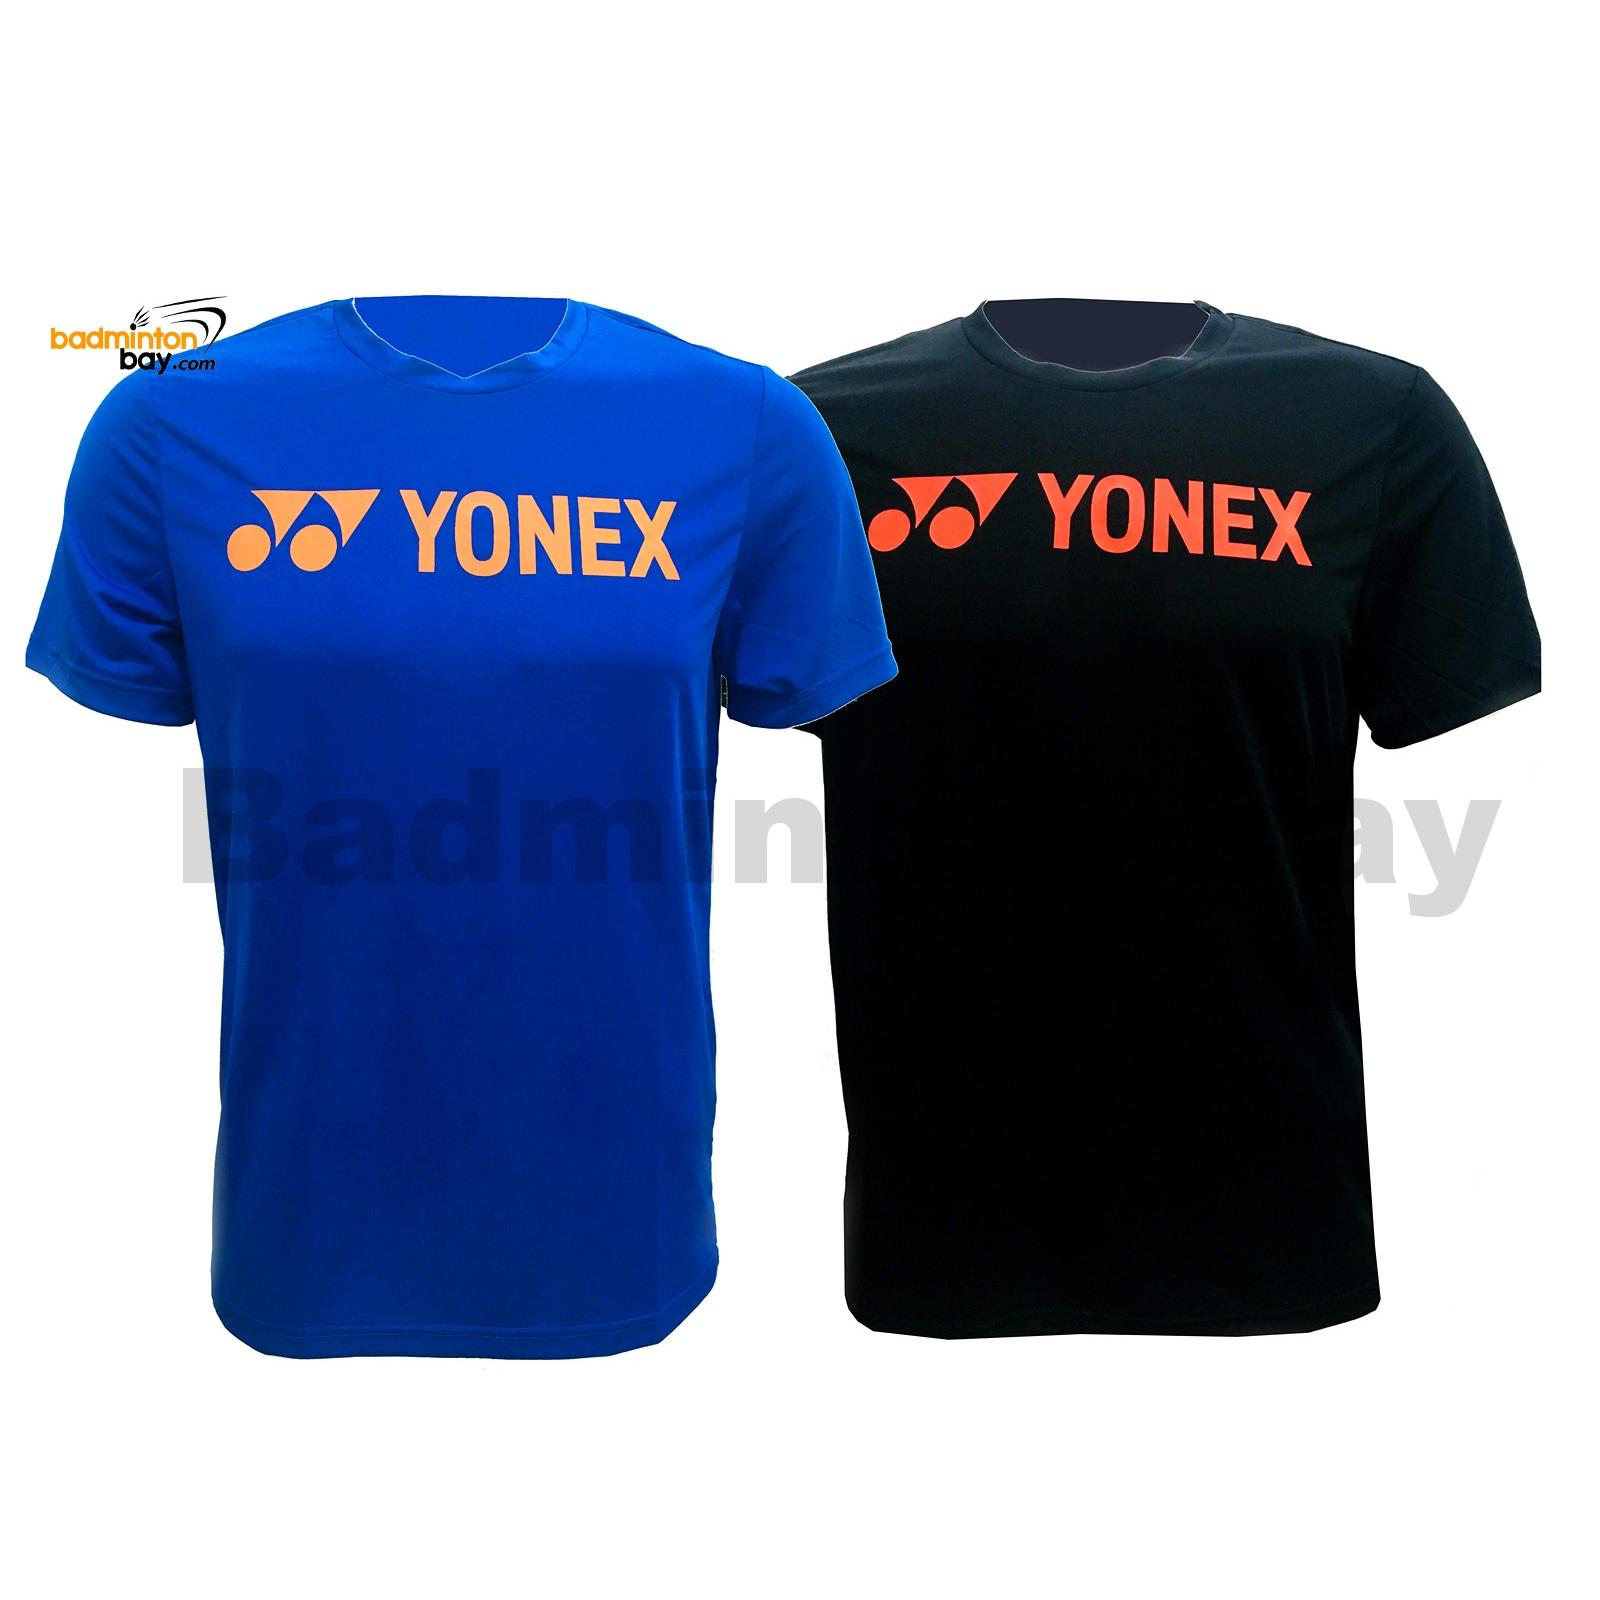 Yonex - Round Neck T-Shirt Quick Dry ...